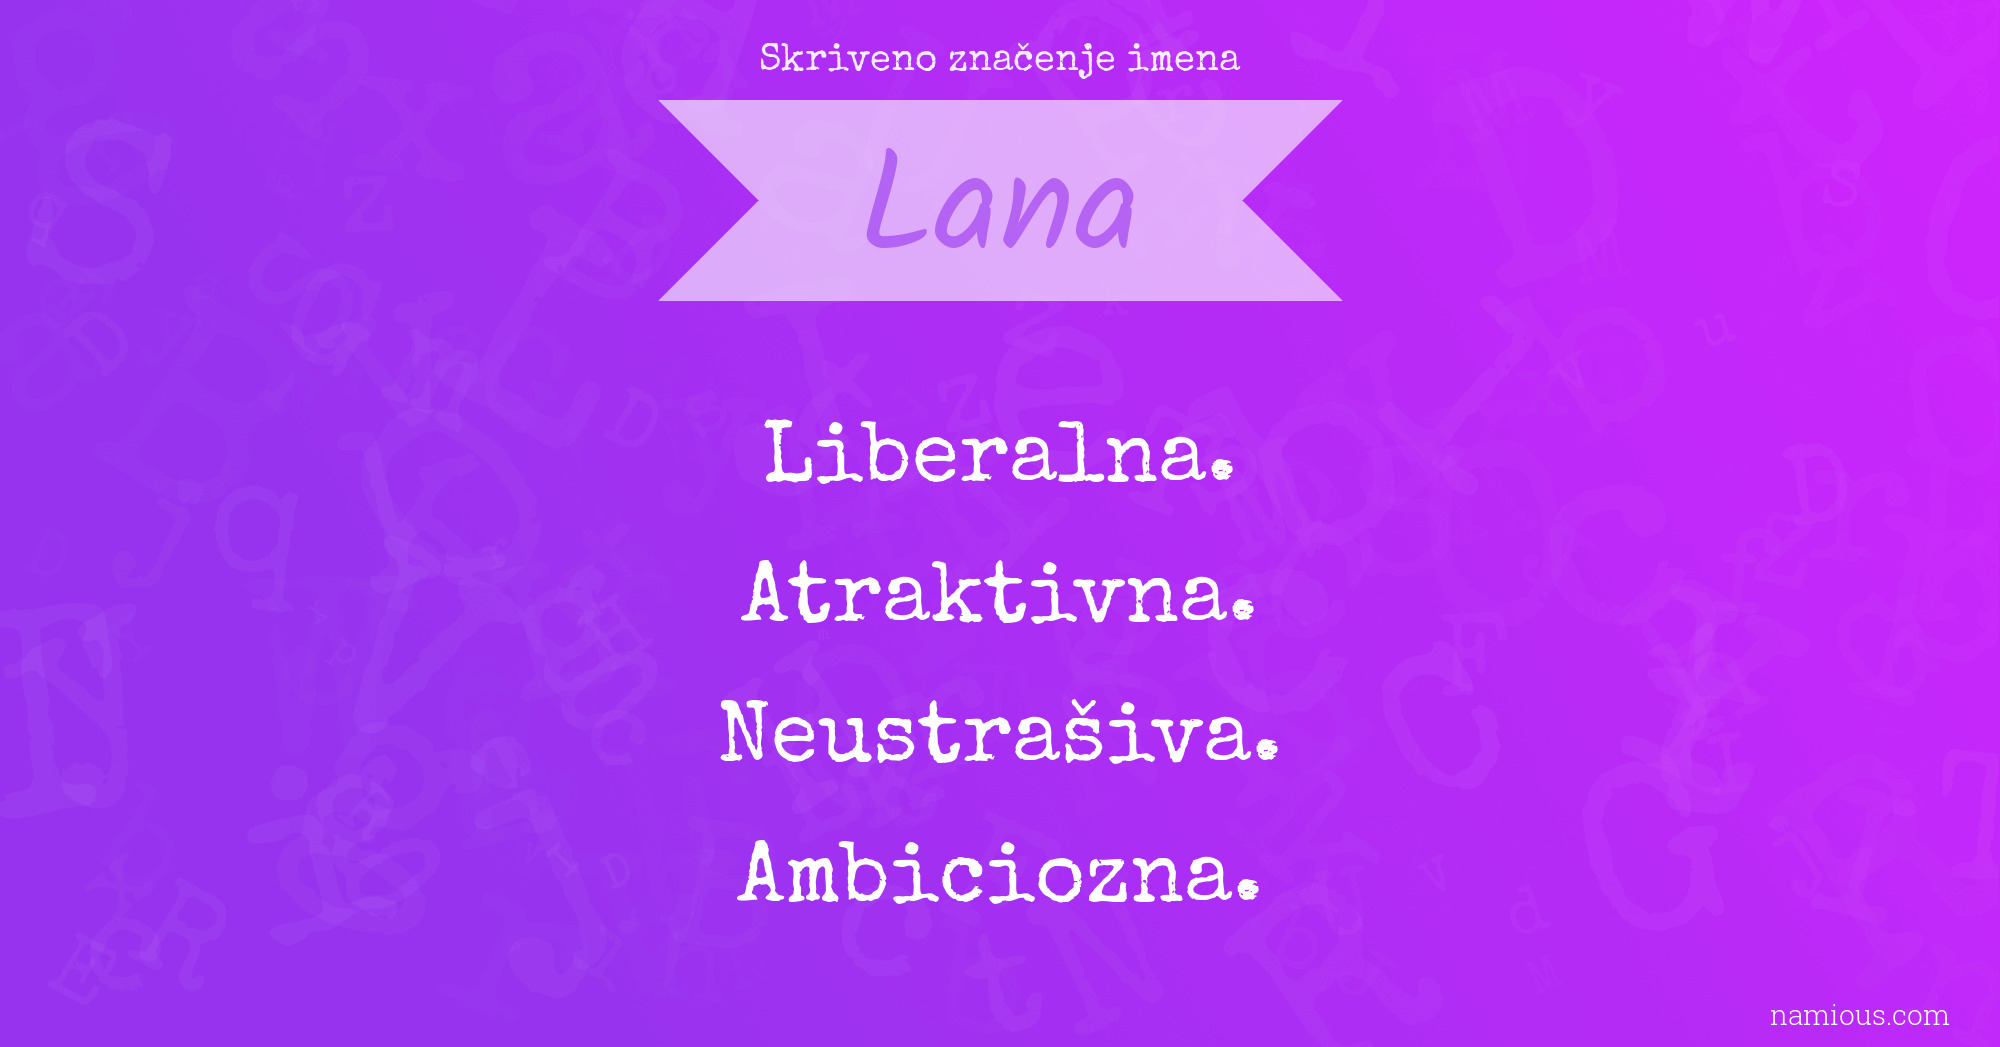 Skriveno značenje imena Lana